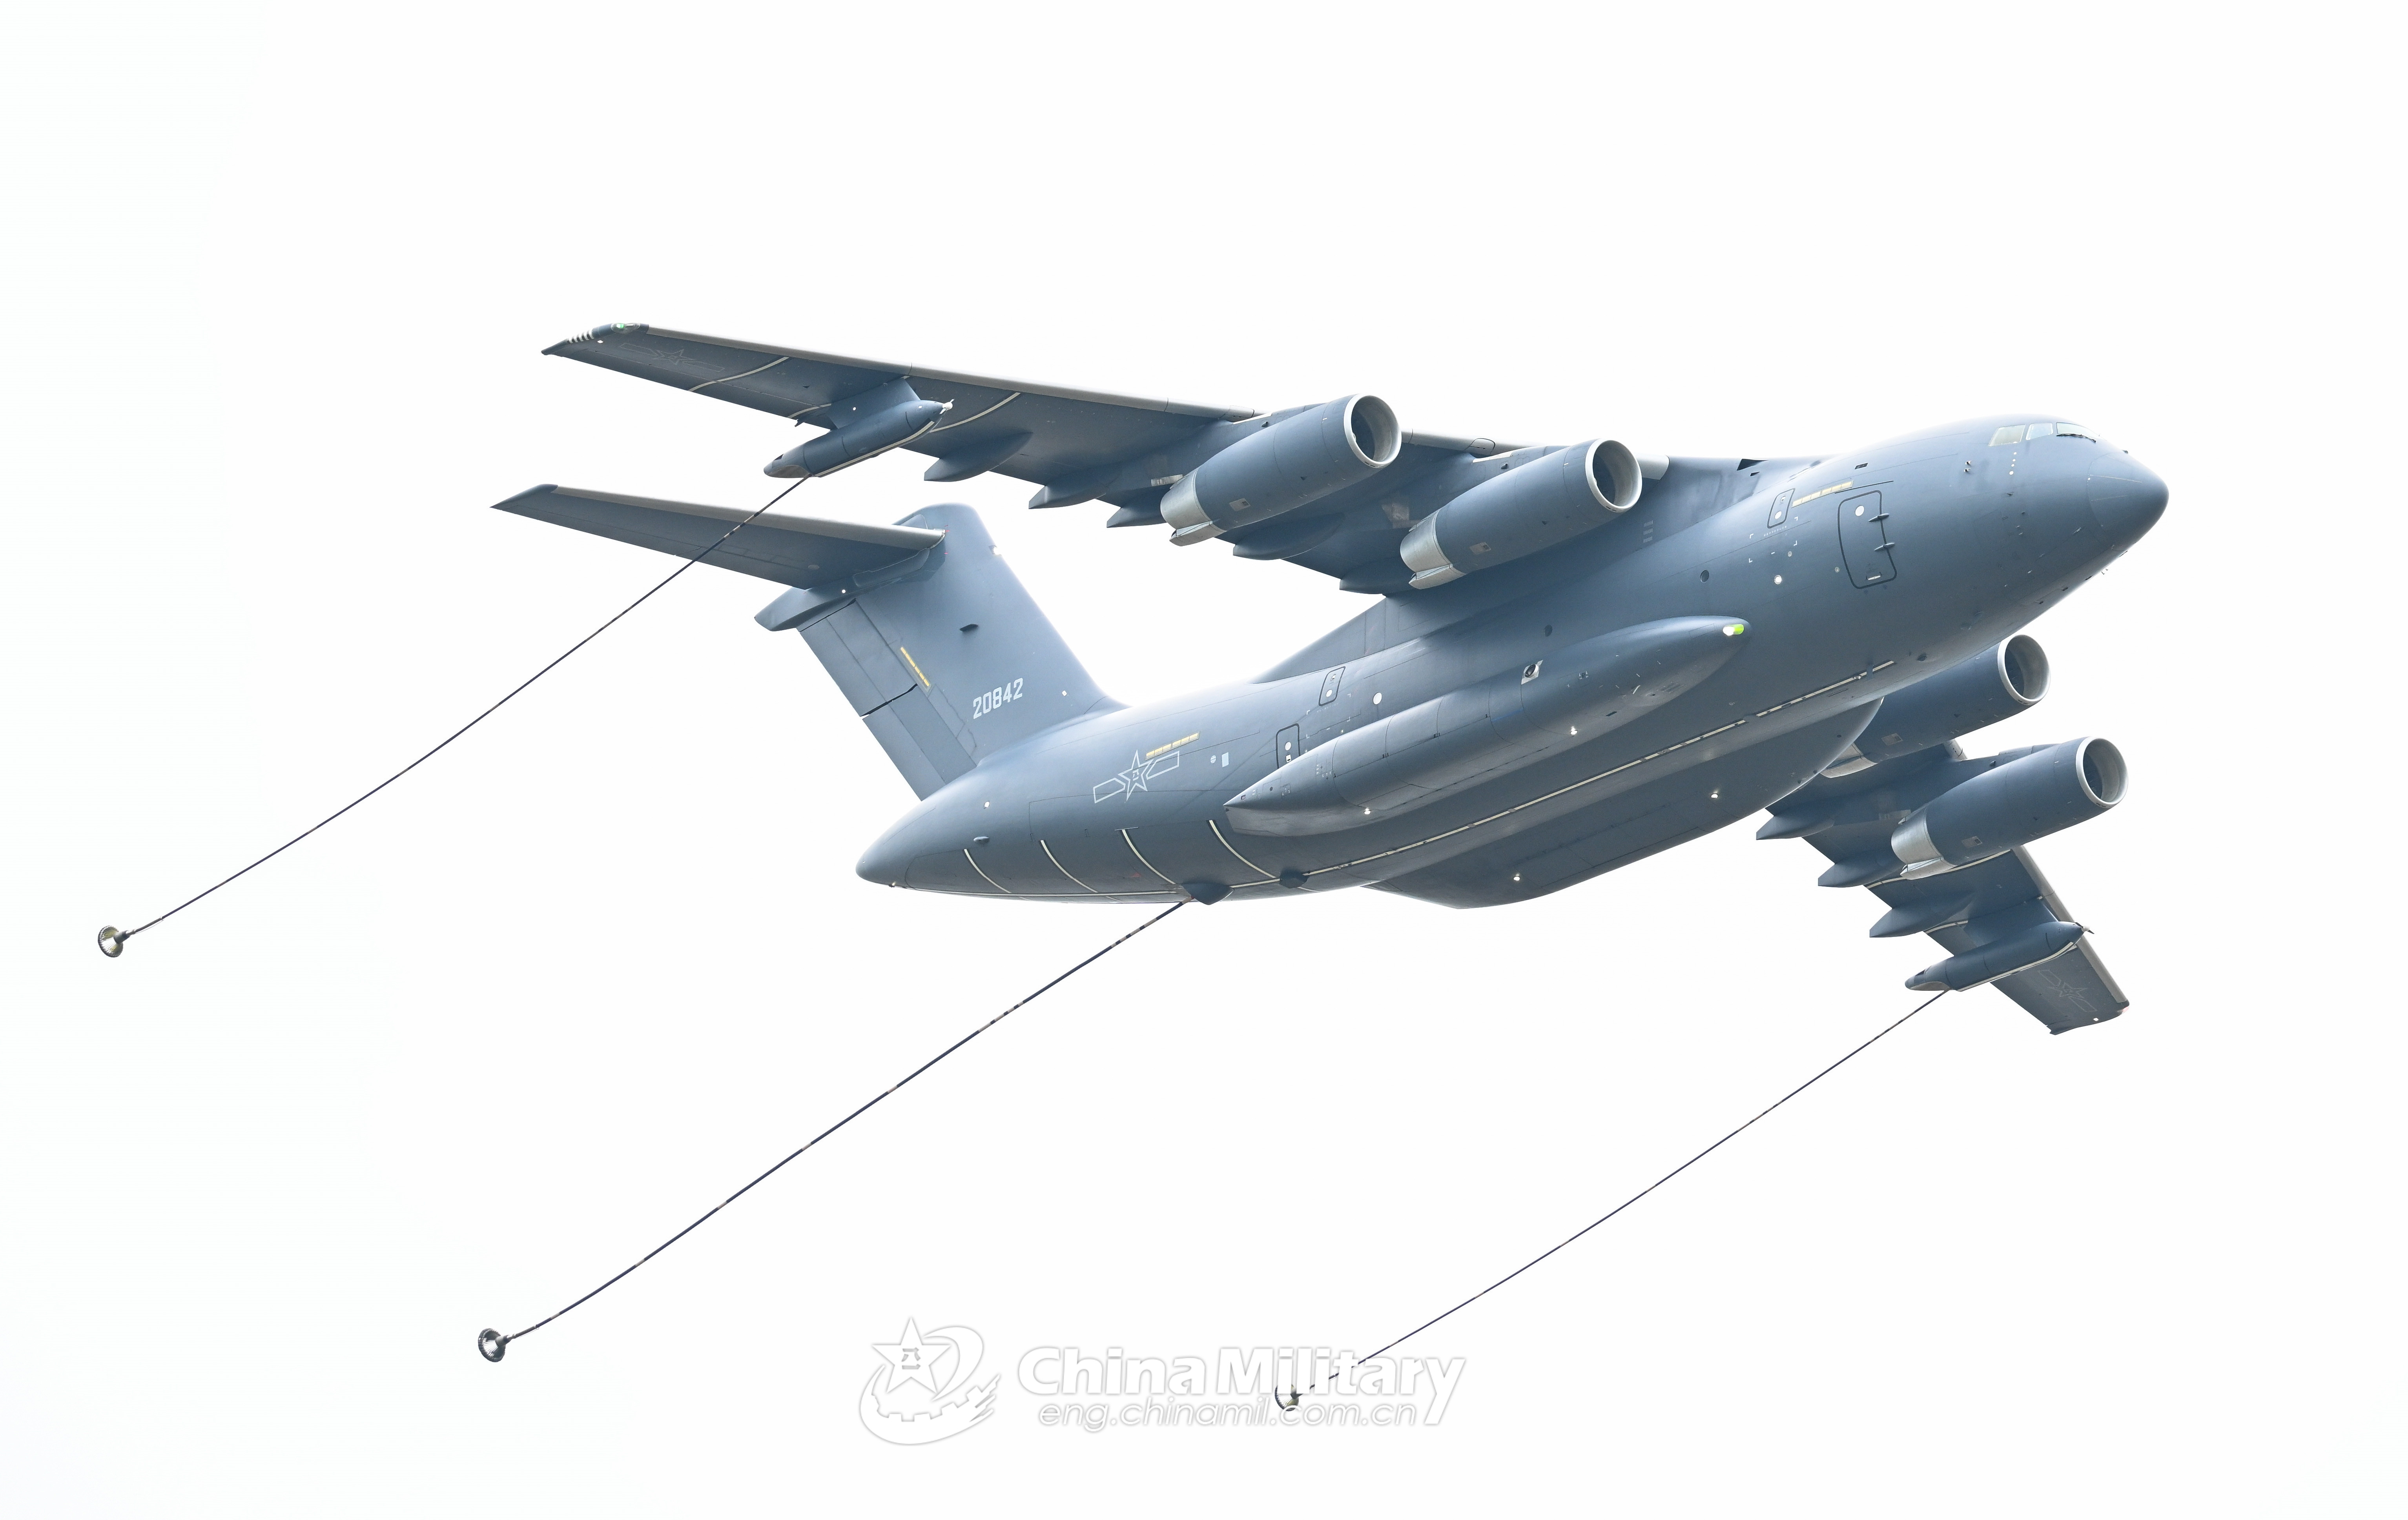 General 6137x3875 China aircraft military watermarked Chinese aircraft PLAAF